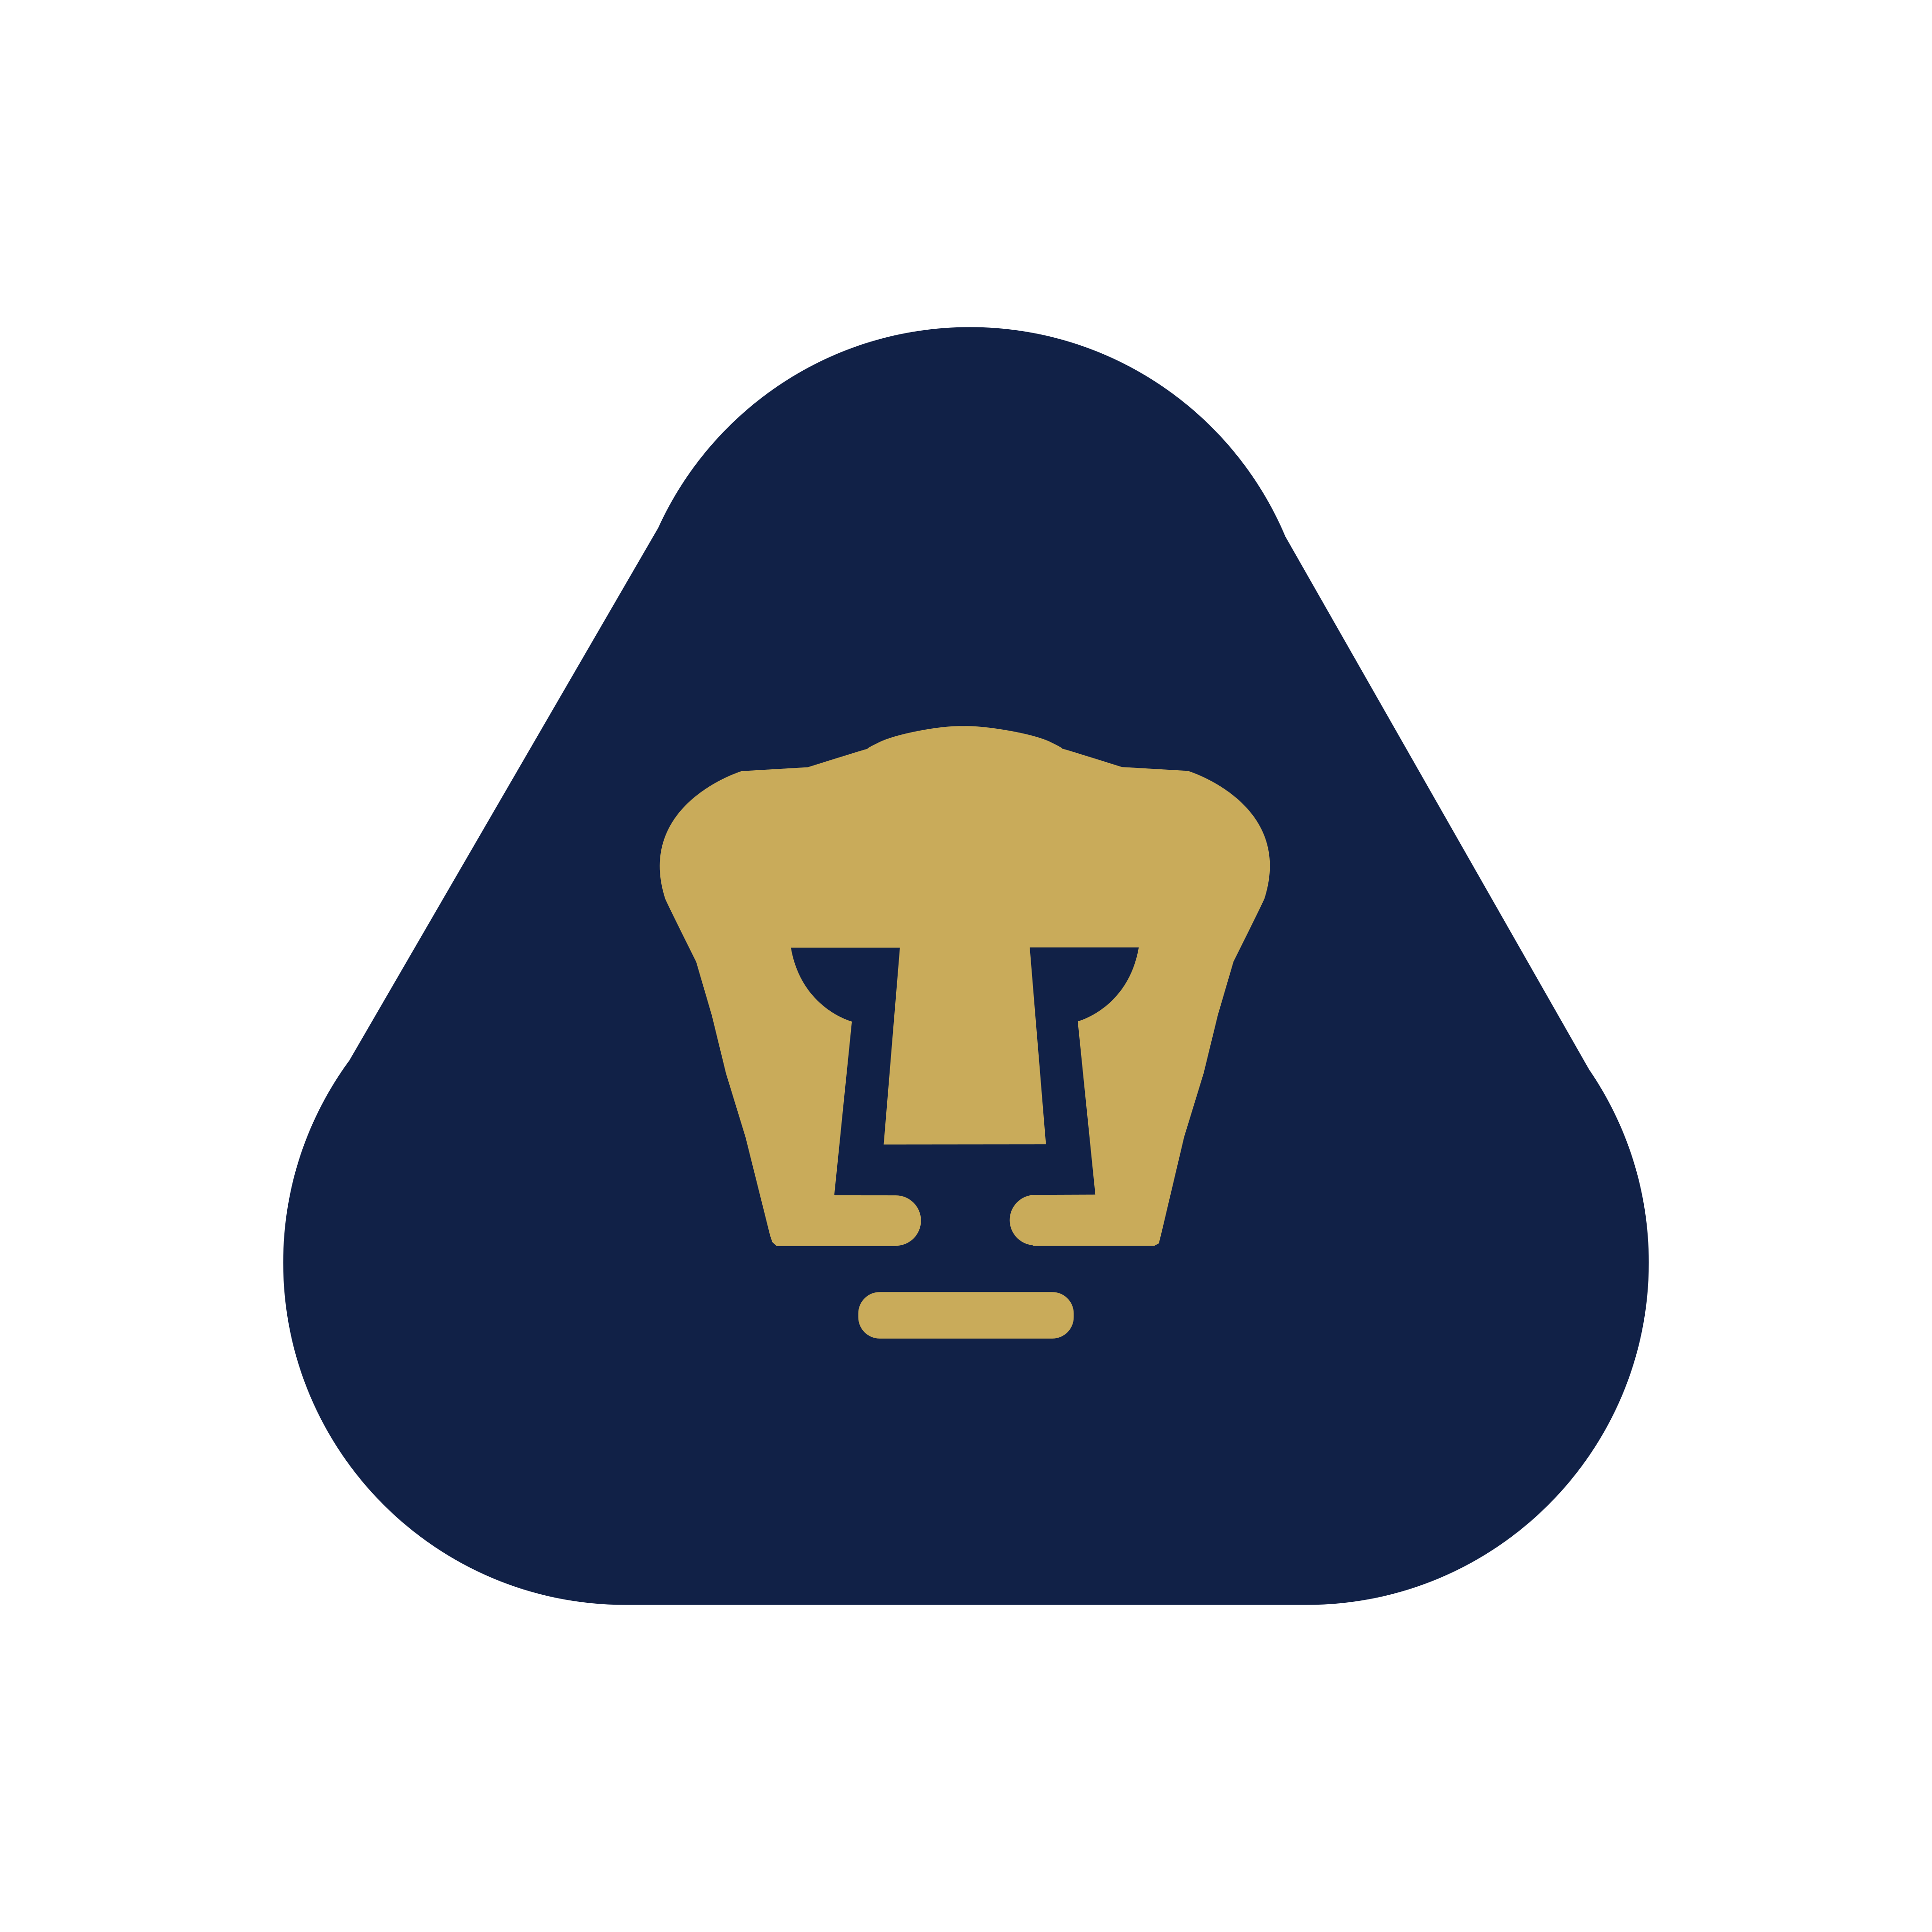 Pumas UNAM Logo PNG.